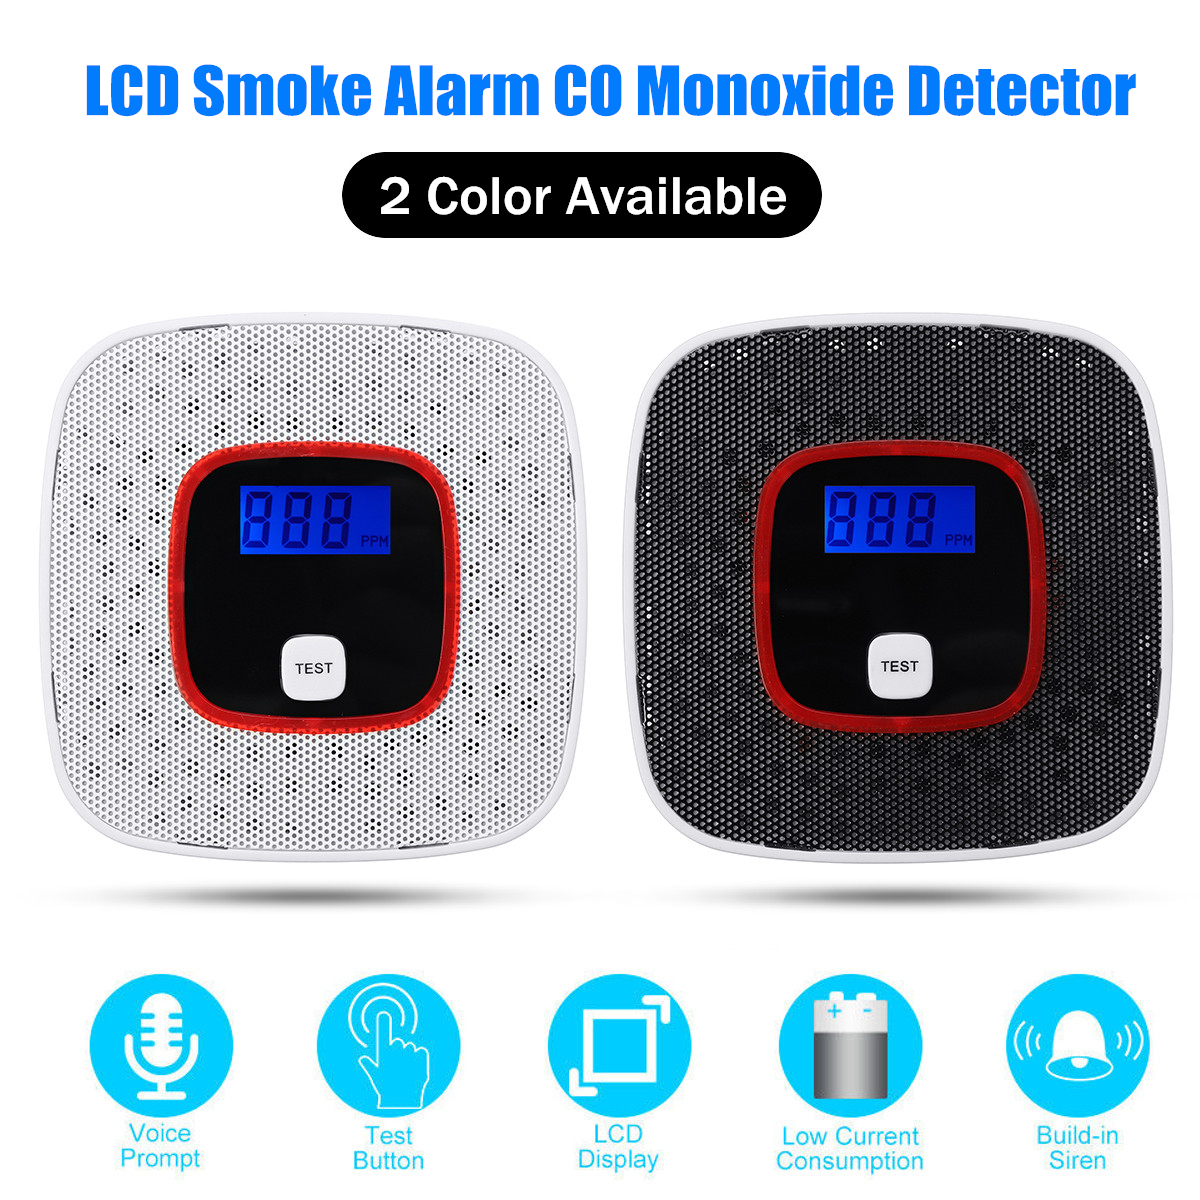 LCD-Smoke-Alarm-CO-Monoxide-Detector-Poisoning-Gas-Warning-Sensor-Monitor-Voice-1406970-1